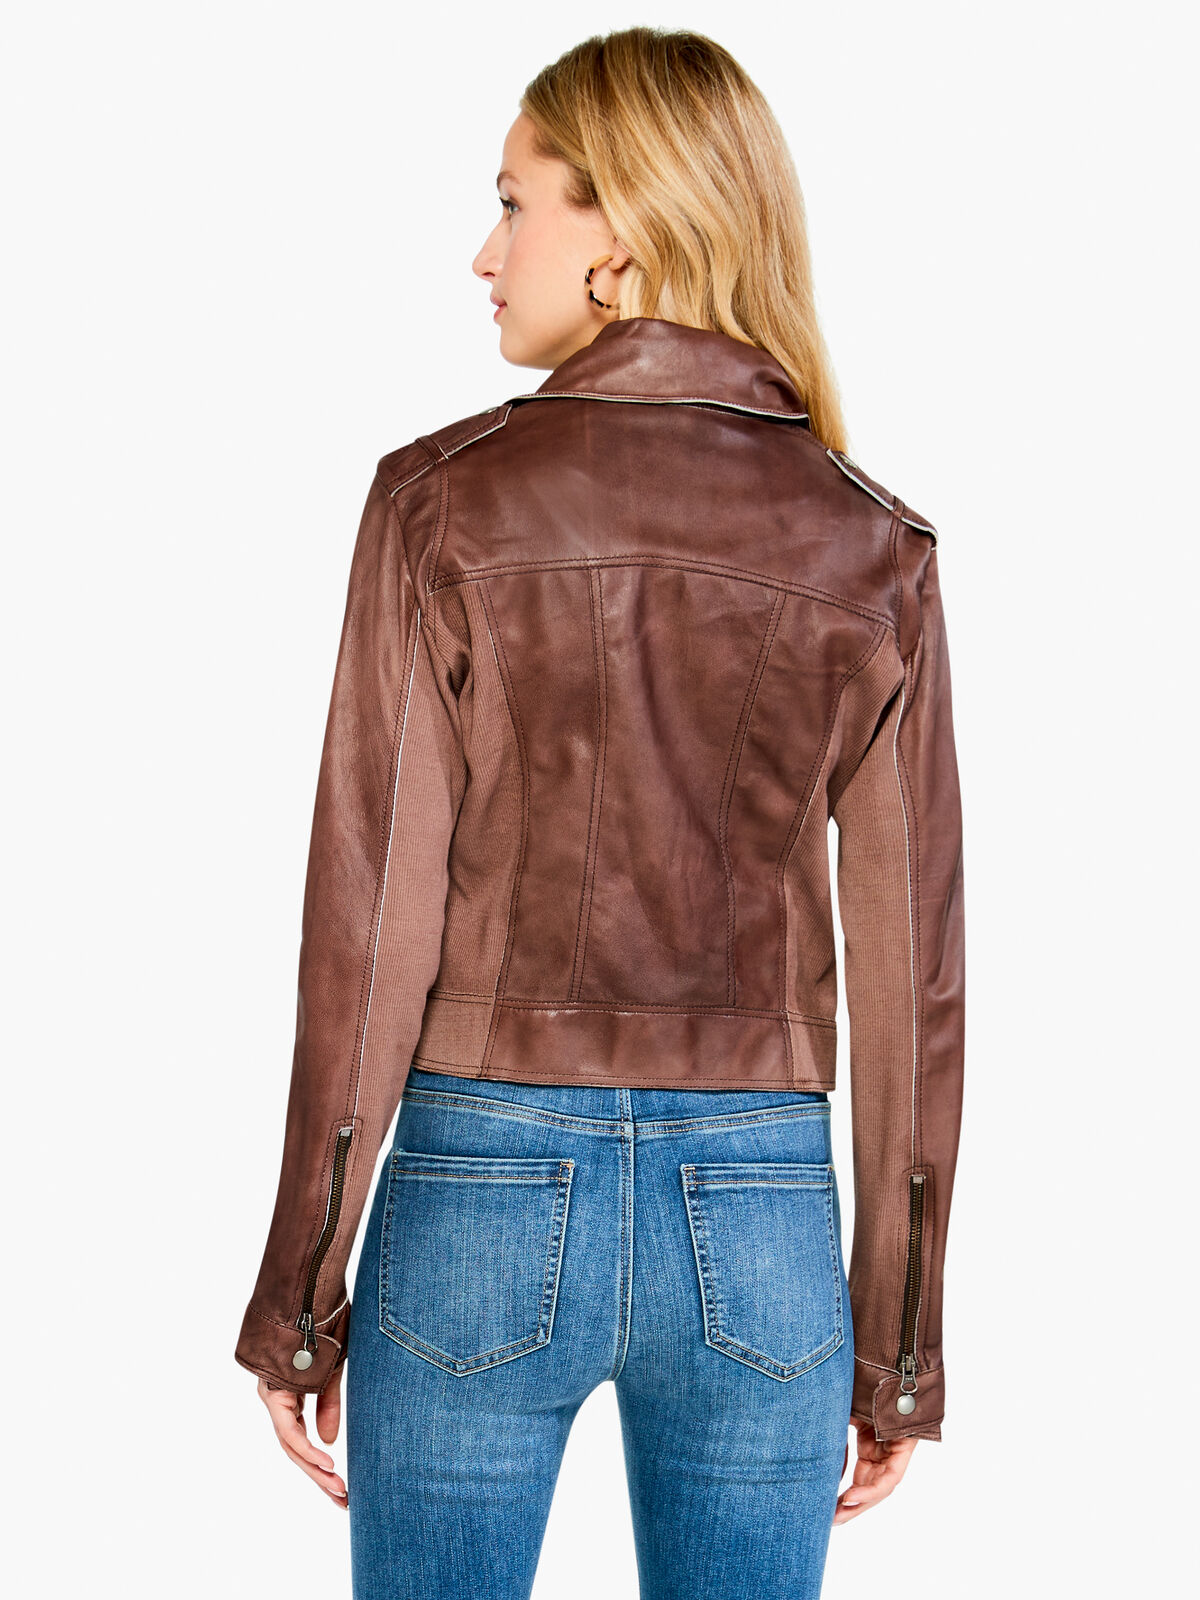 JKT Piper Leather Jacket